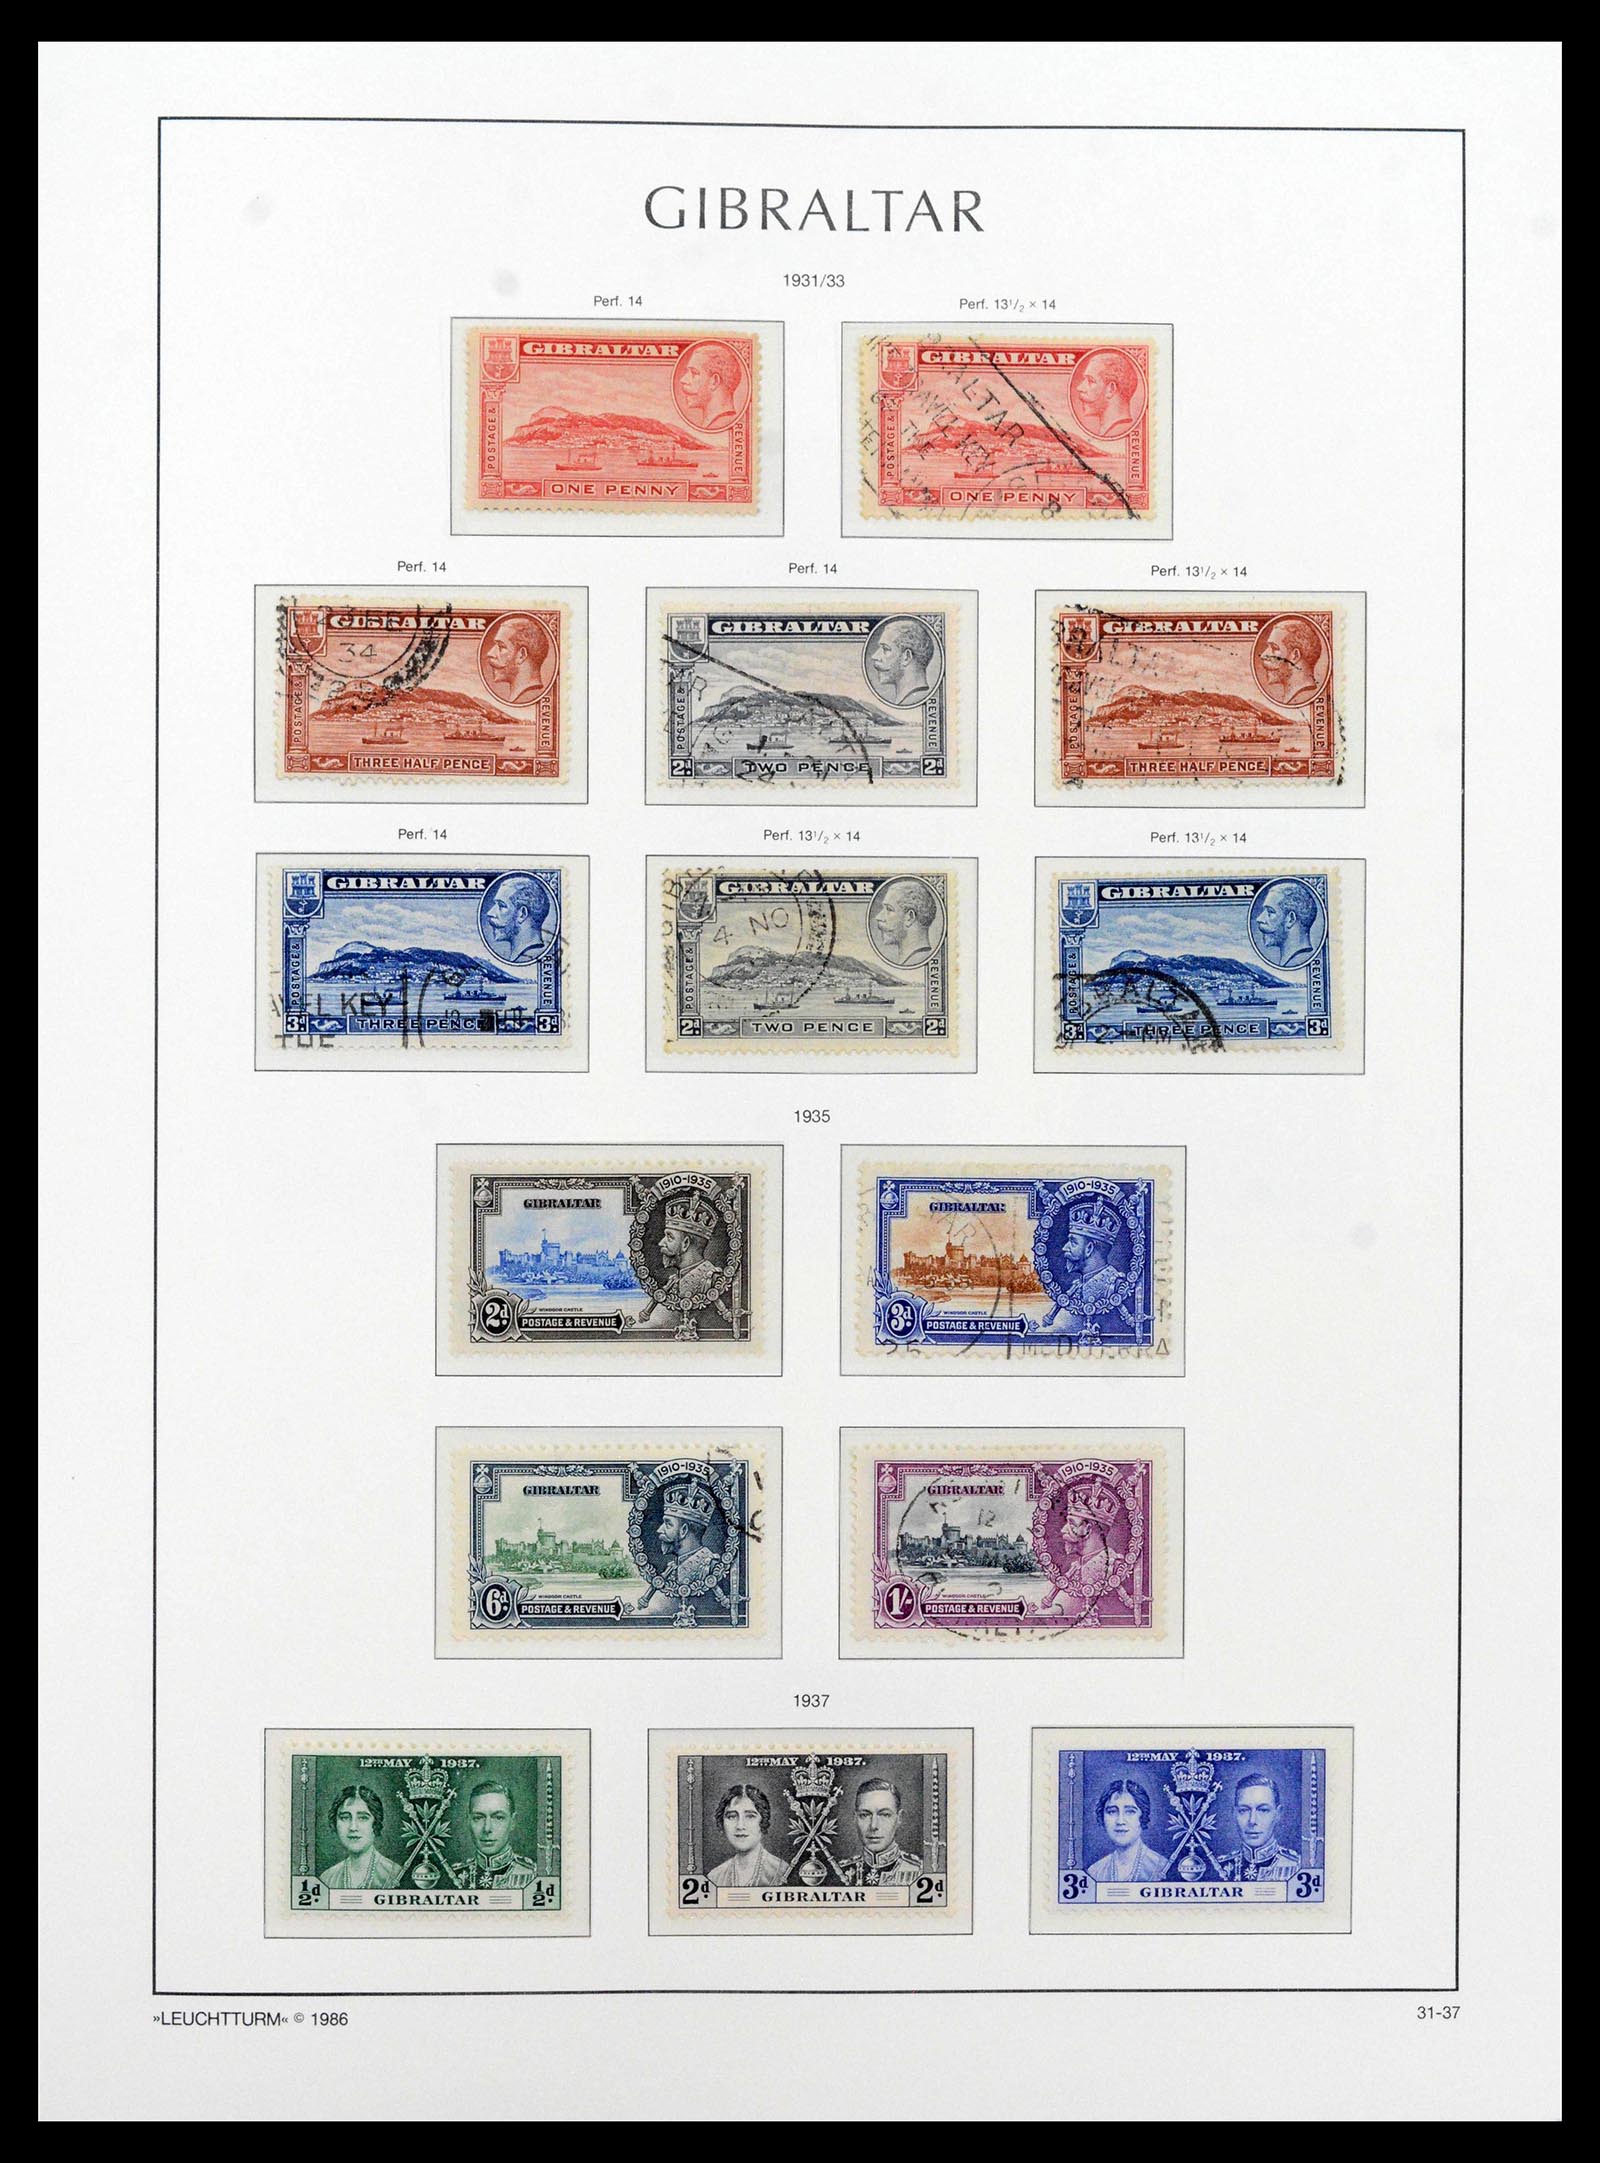 39158 0008 - Stamp collection 39158 Gibraltar 1886-2013.